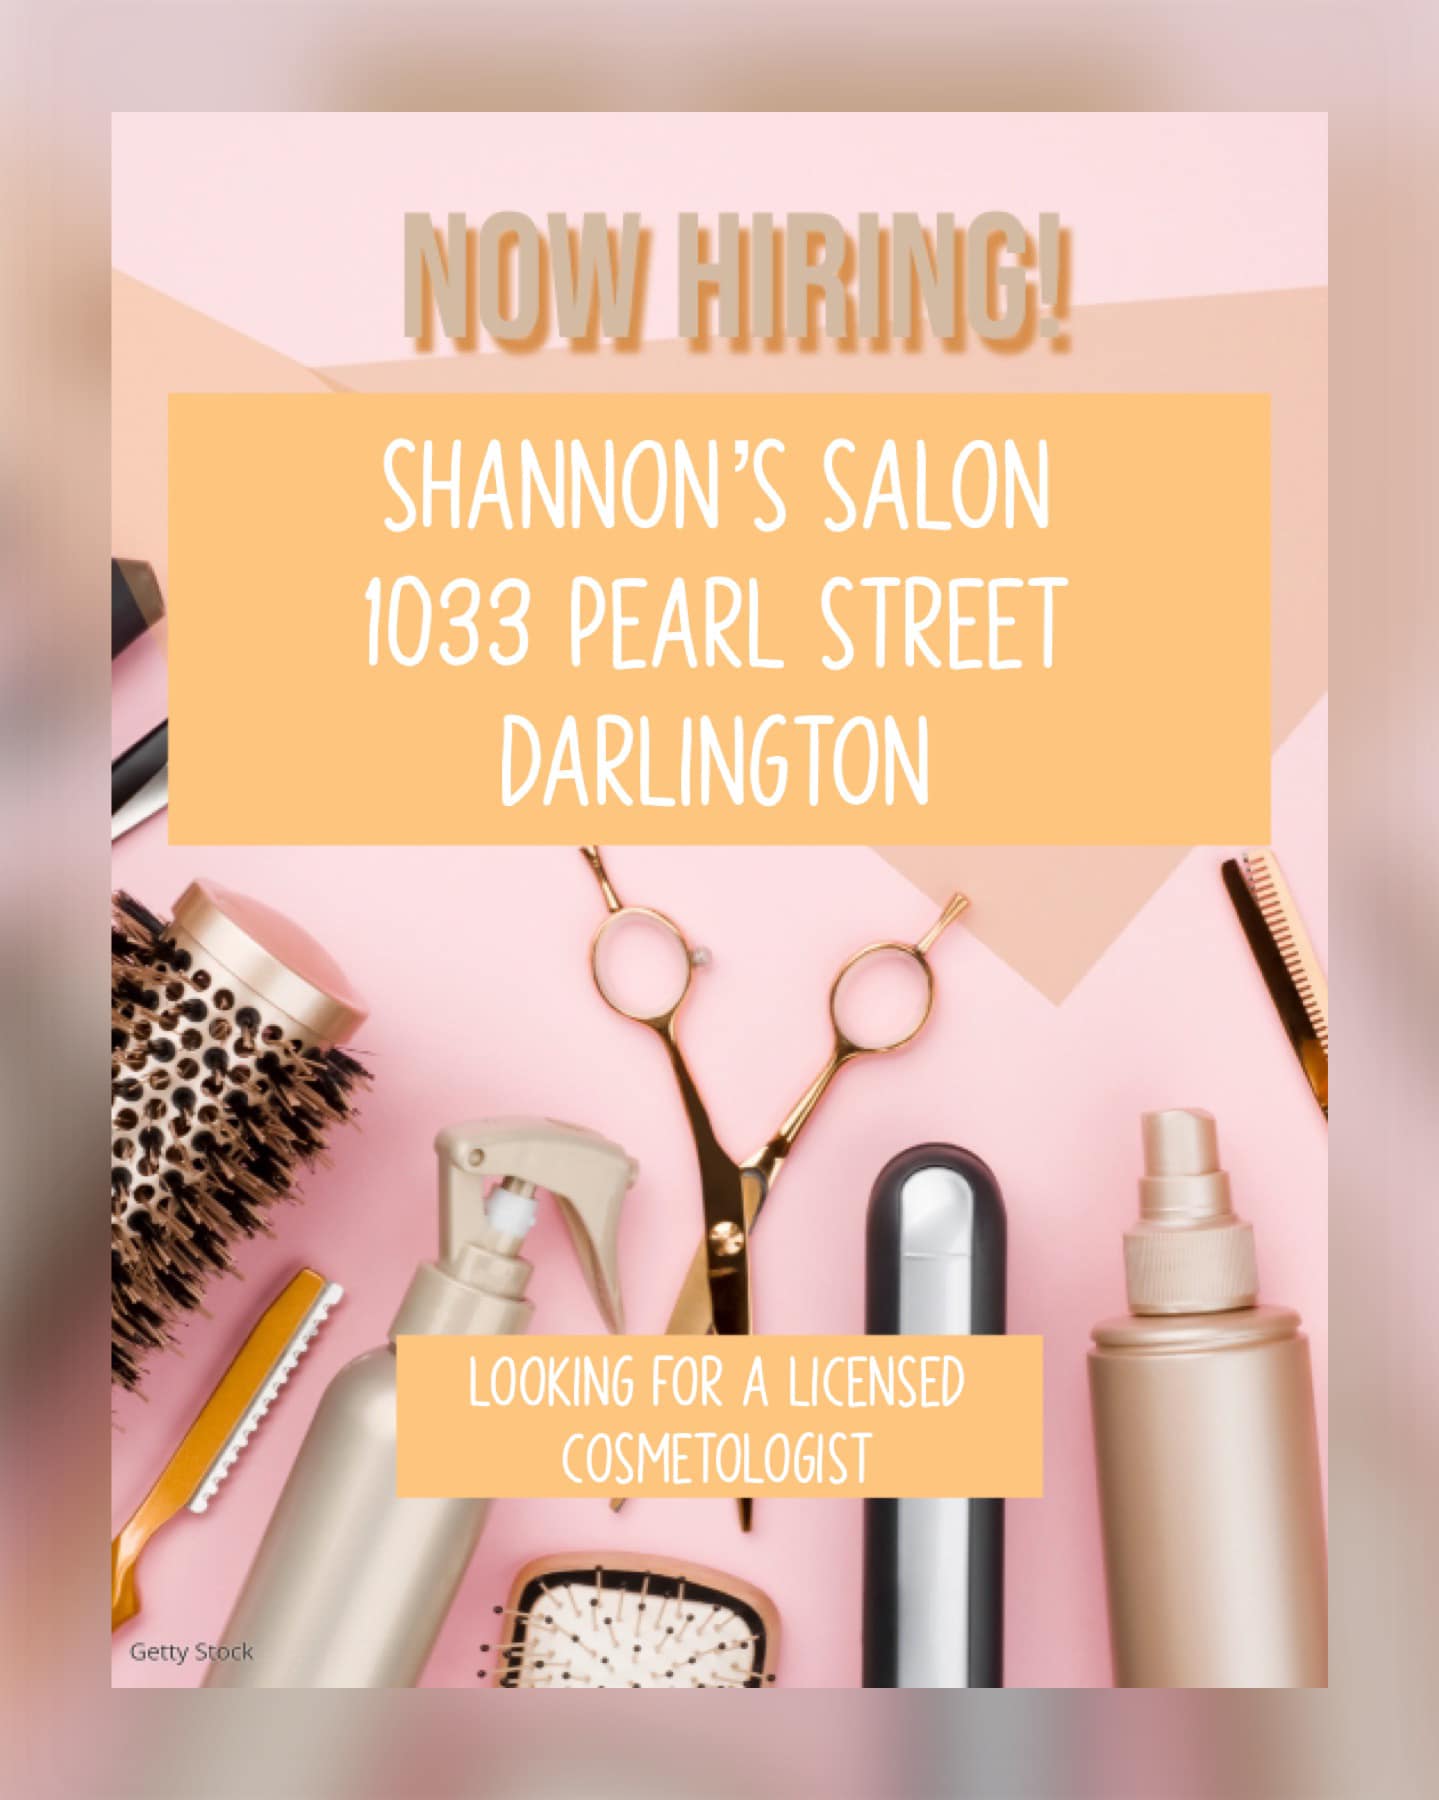 Shannon's Salon 527 N Main St, Darlington South Carolina 29532